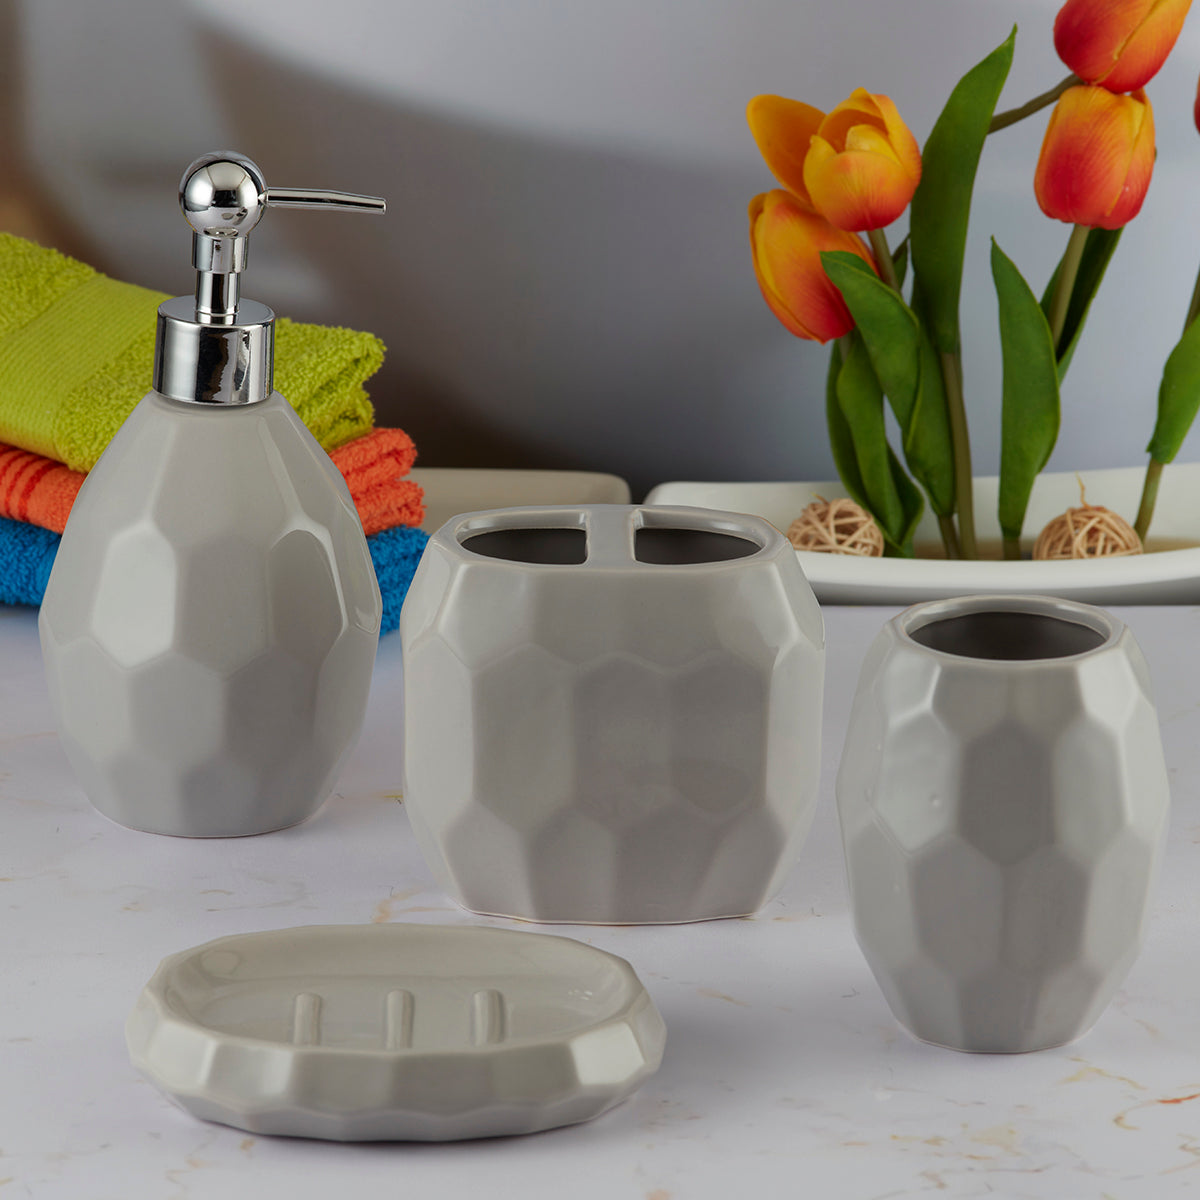 Ceramic Bathroom Accessories Set of 4 Bath Set with Soap Dispenser (5762)